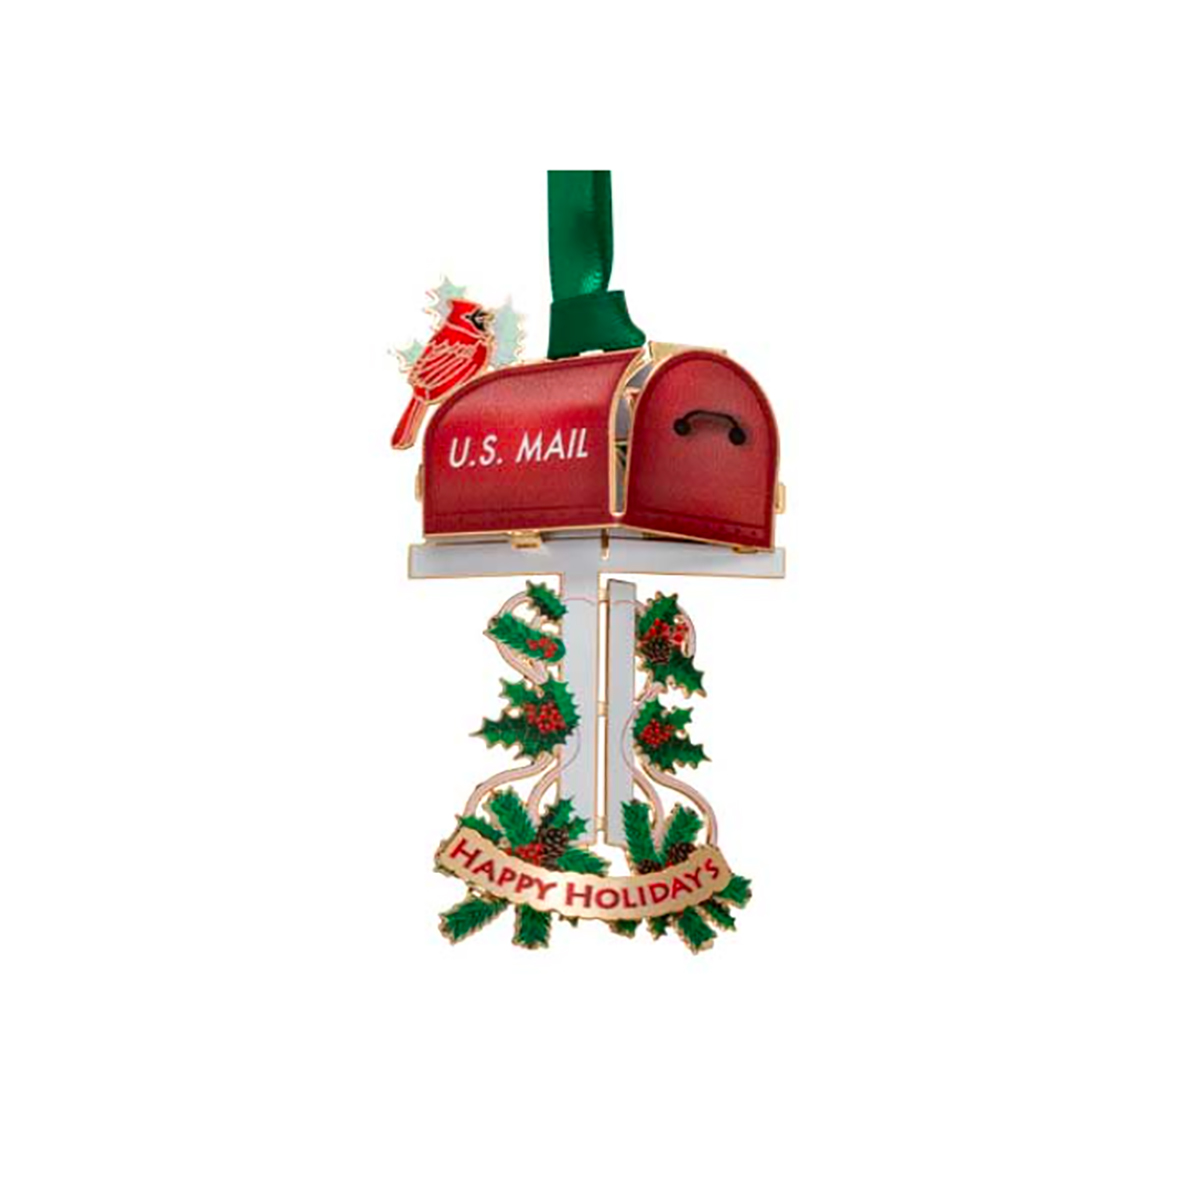 Beacon Design Holiday Mailbox Ornament